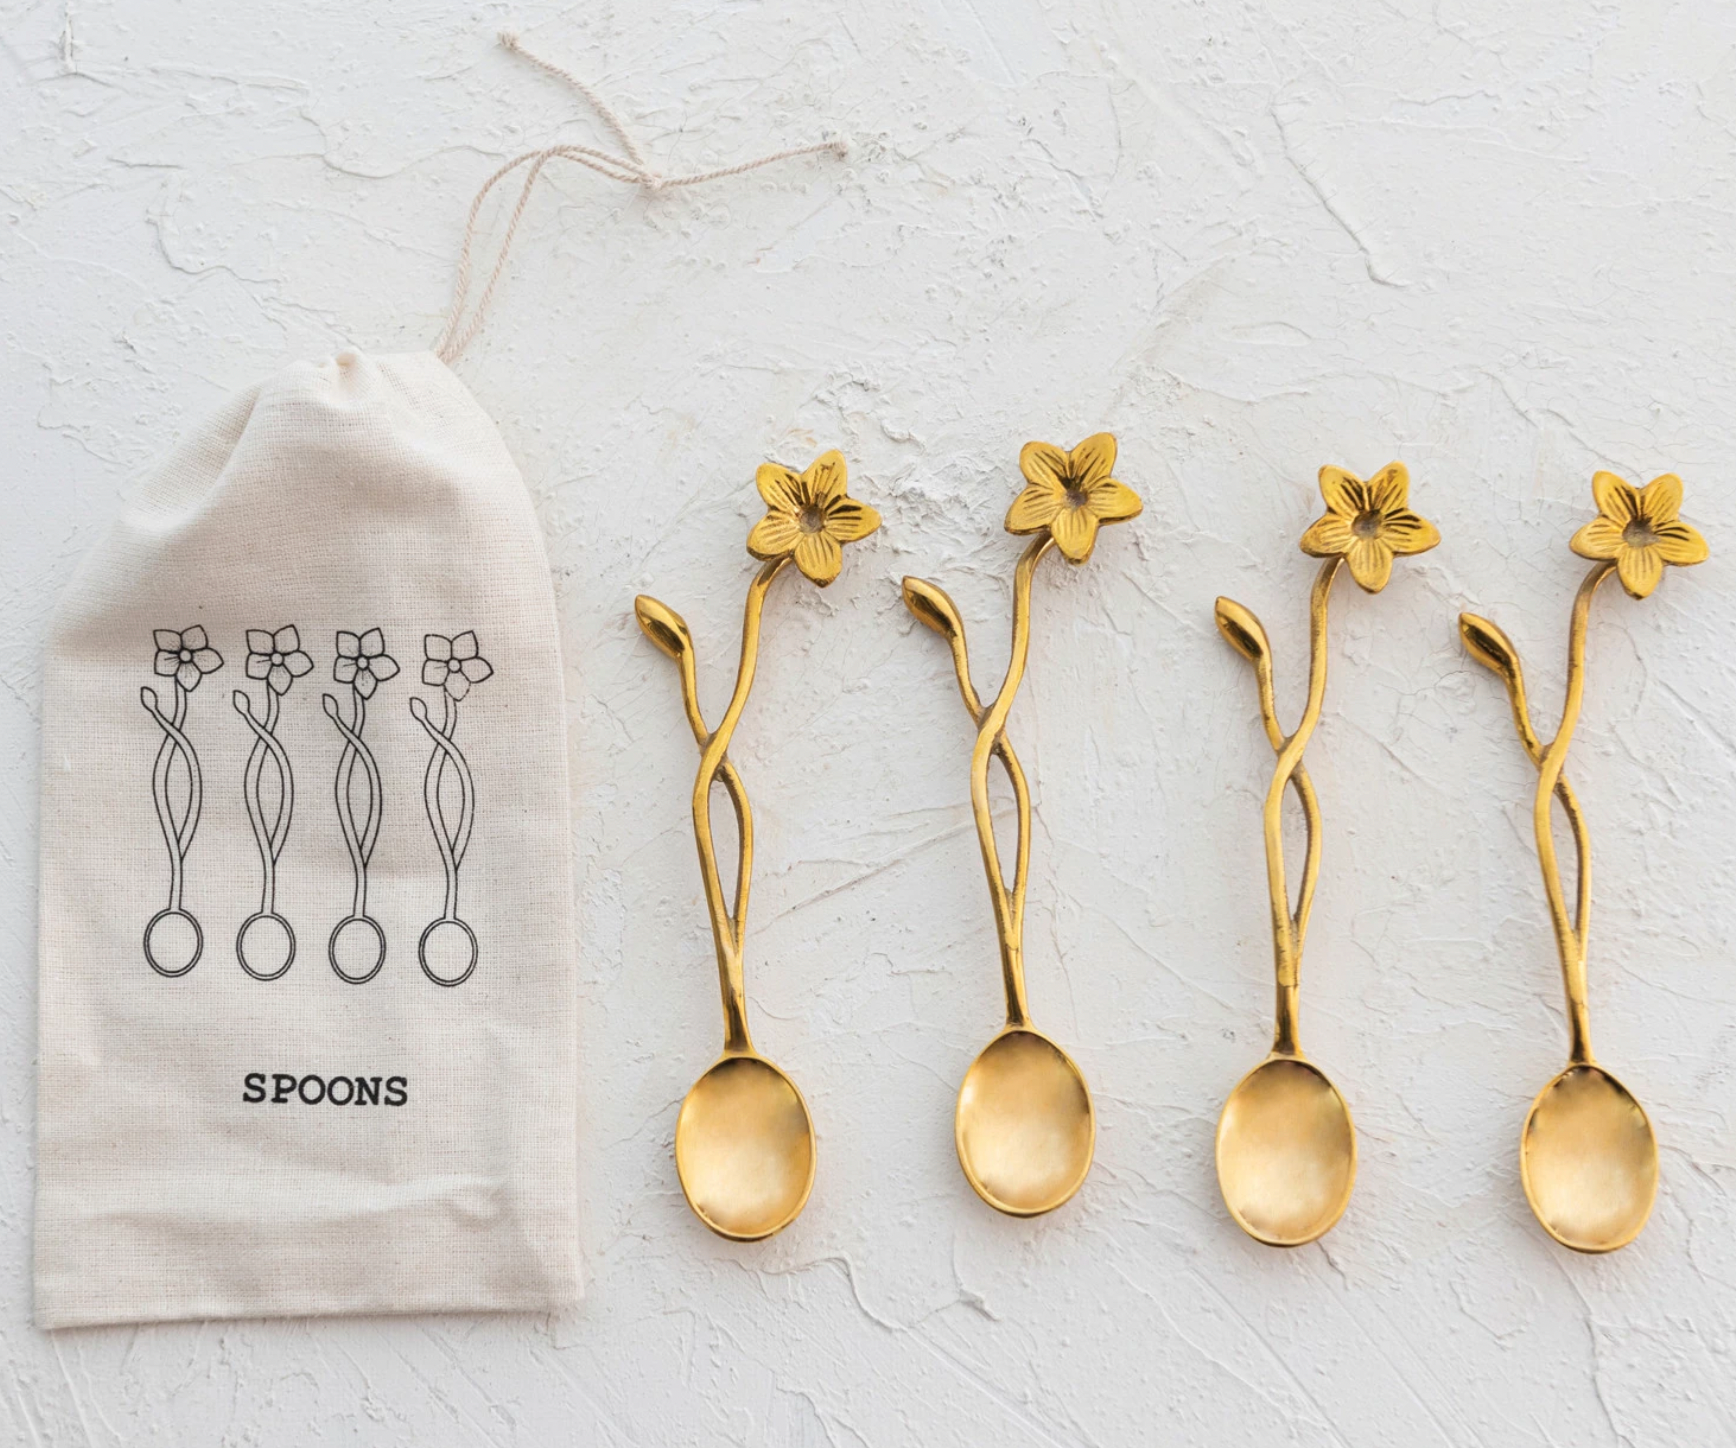 Brass Spoons w Flower Handles Set